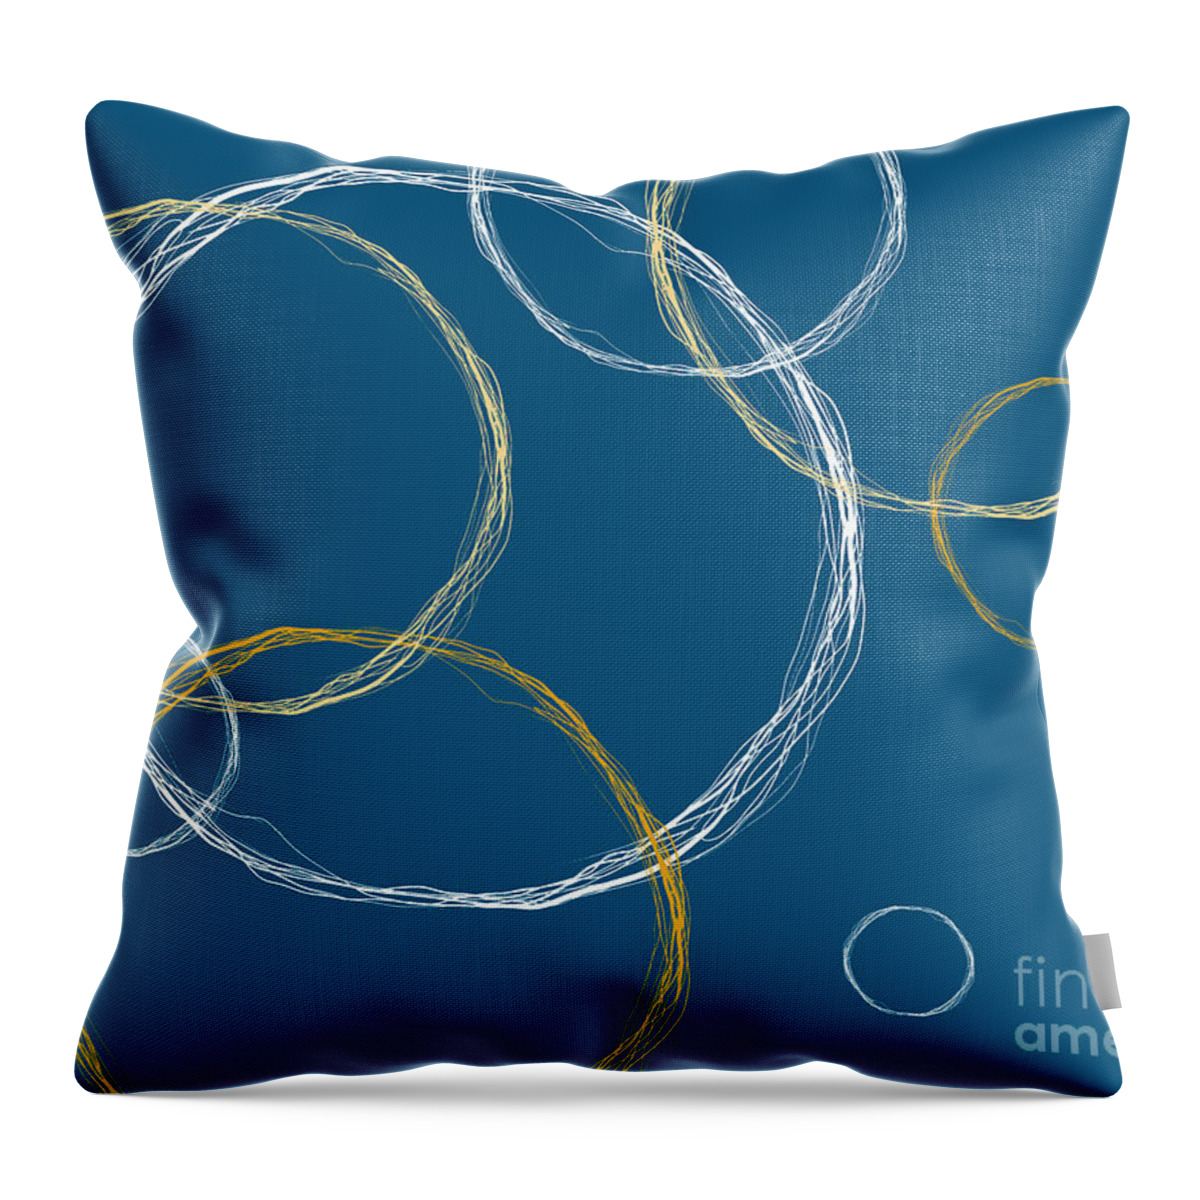 Abstract Circles Throw Pillow featuring the digital art Modern Abstract Circles Design by Patricia Awapara